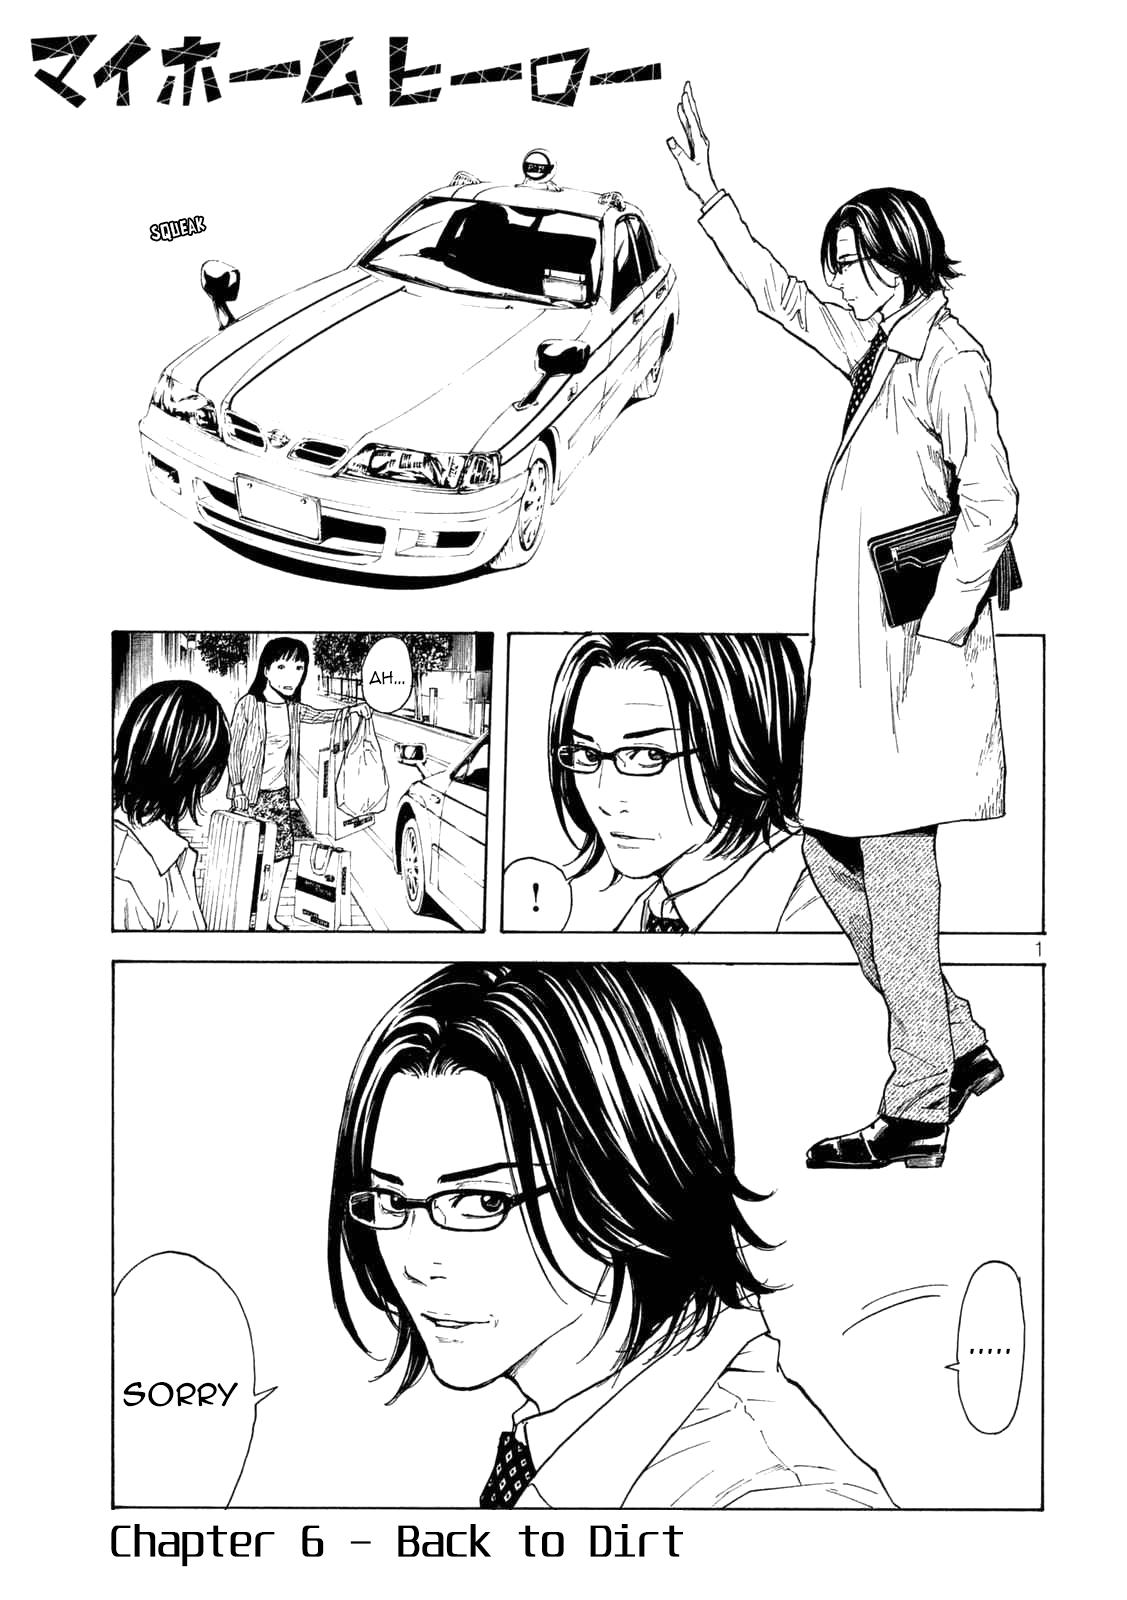 Todo Se Repite / My home hero Tomo 6 Parte 1 Final Manga Resumen 